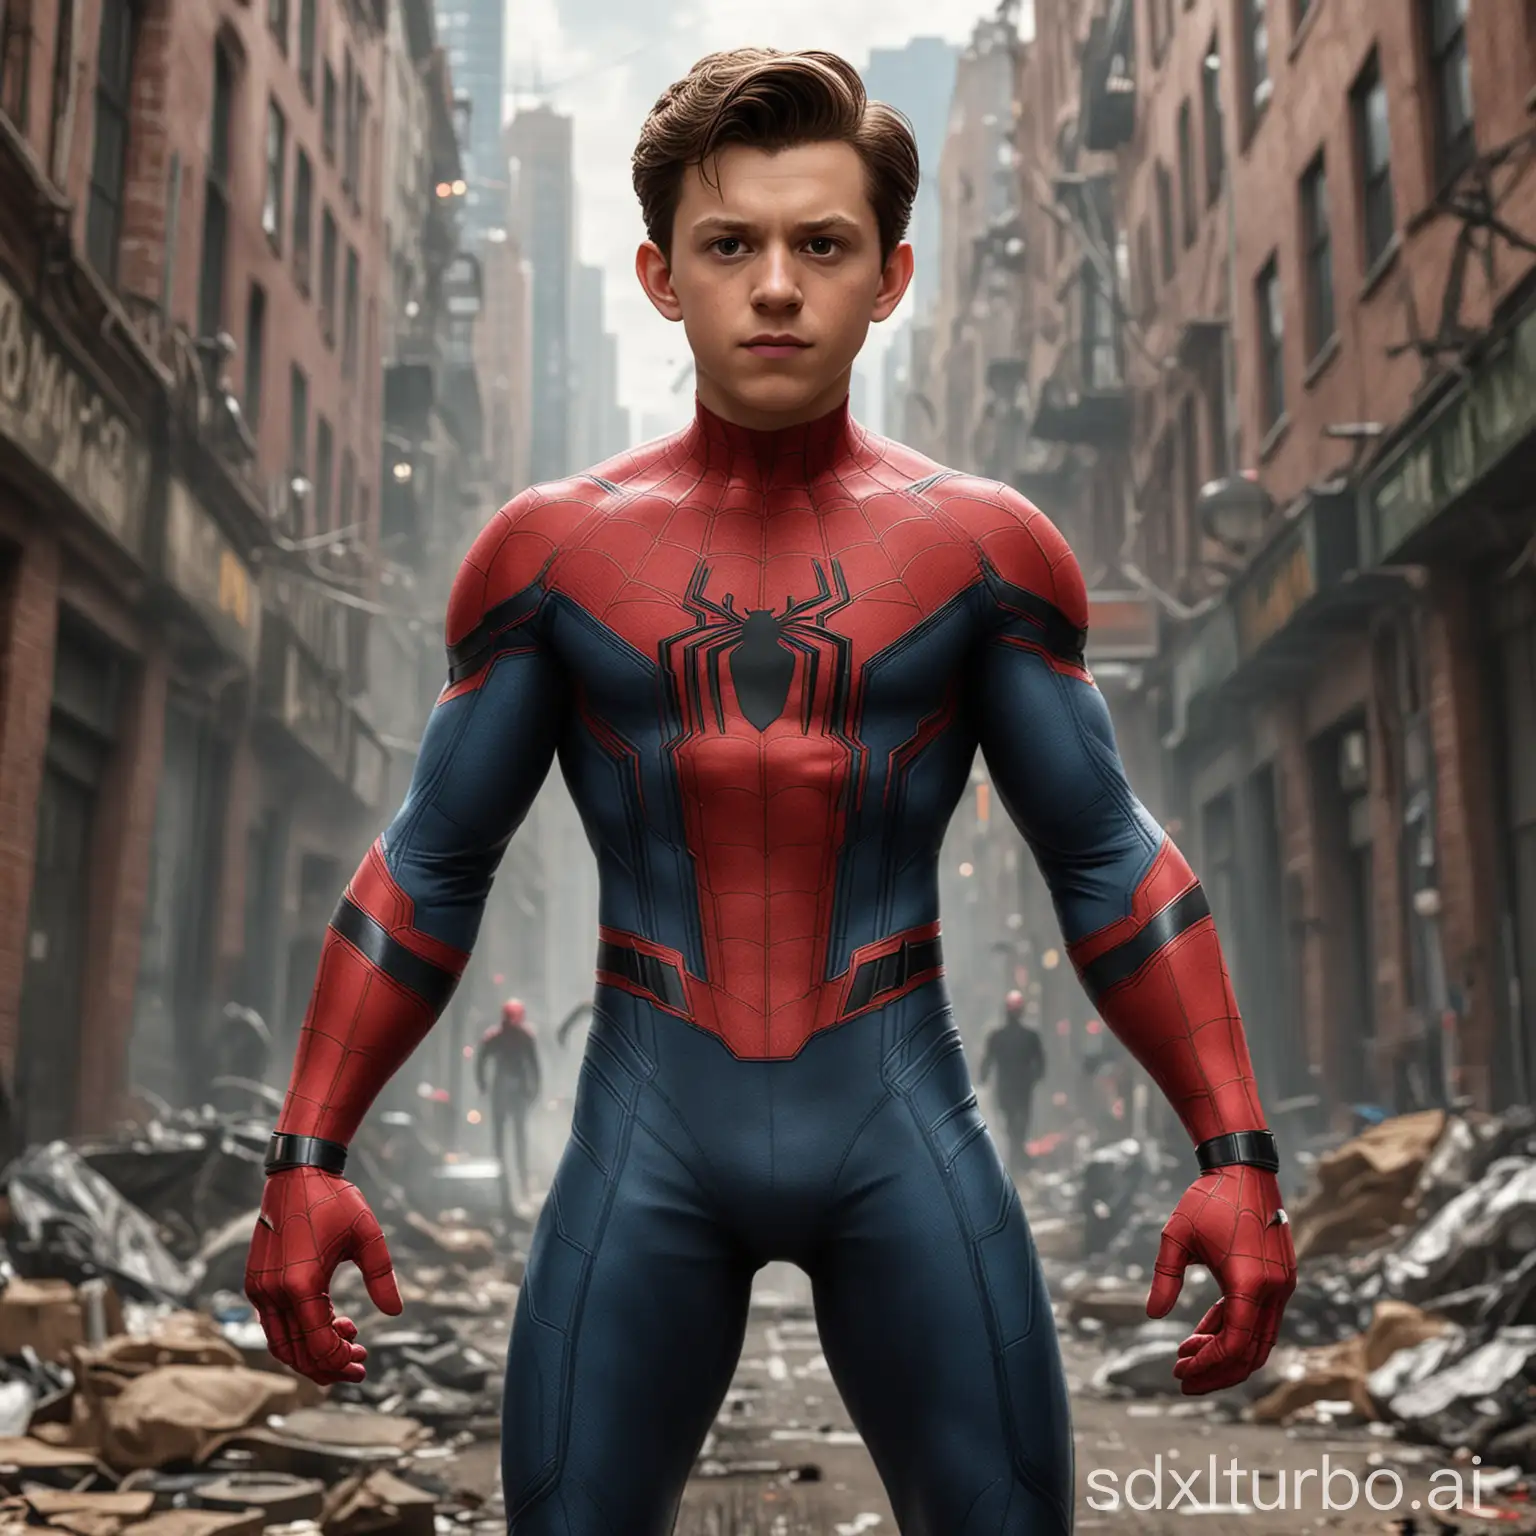 Tom-Holland-as-Spiderman-Cartoon-Caricature-in-Futuristic-Costume